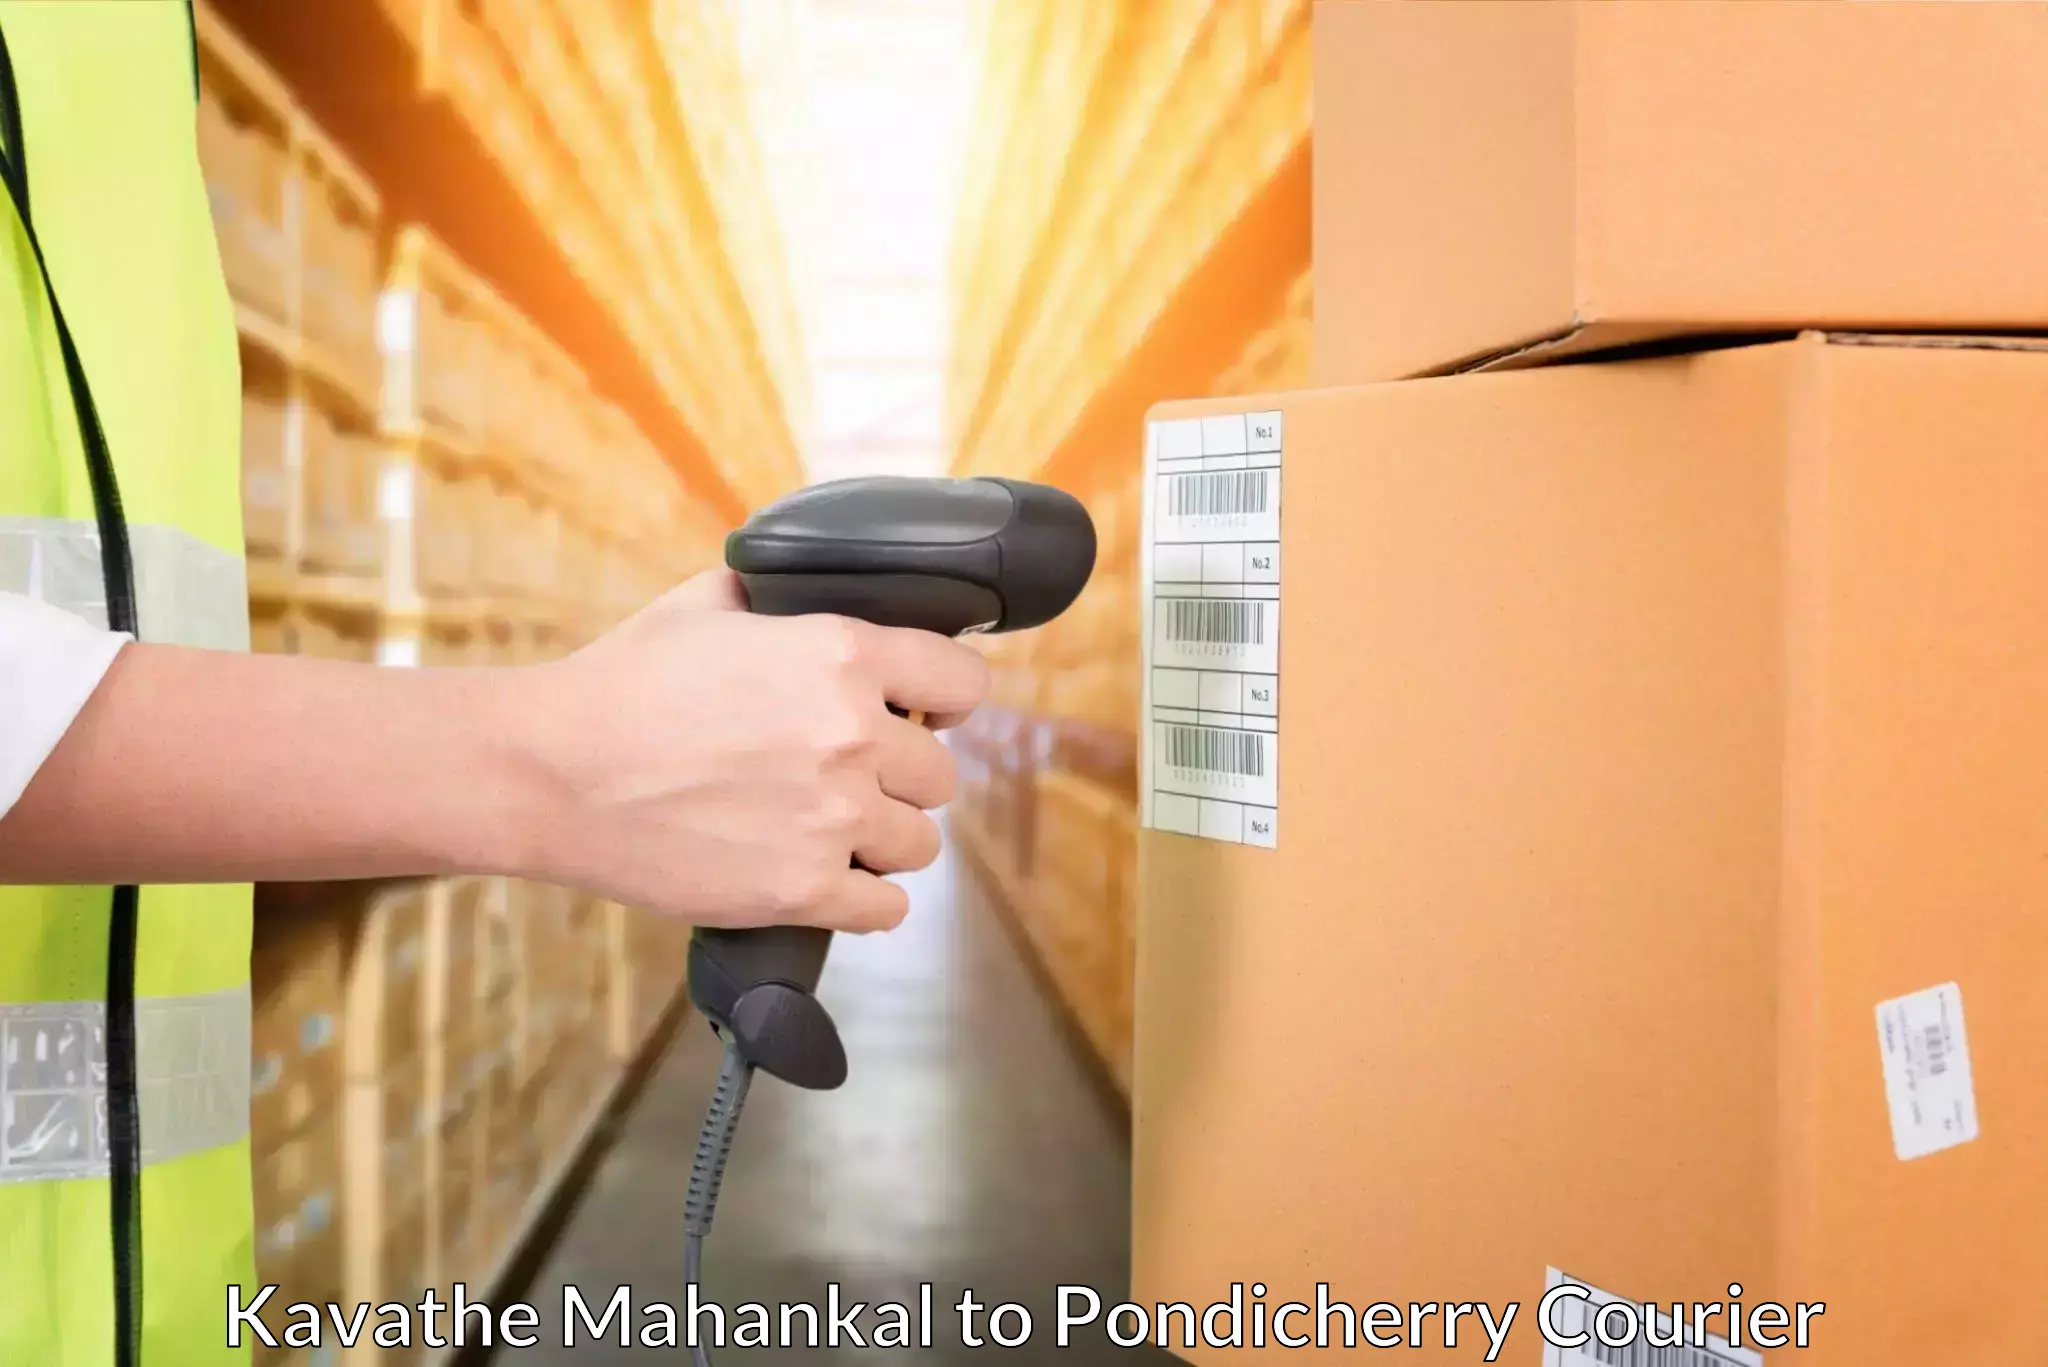 Speedy delivery service Kavathe Mahankal to Pondicherry